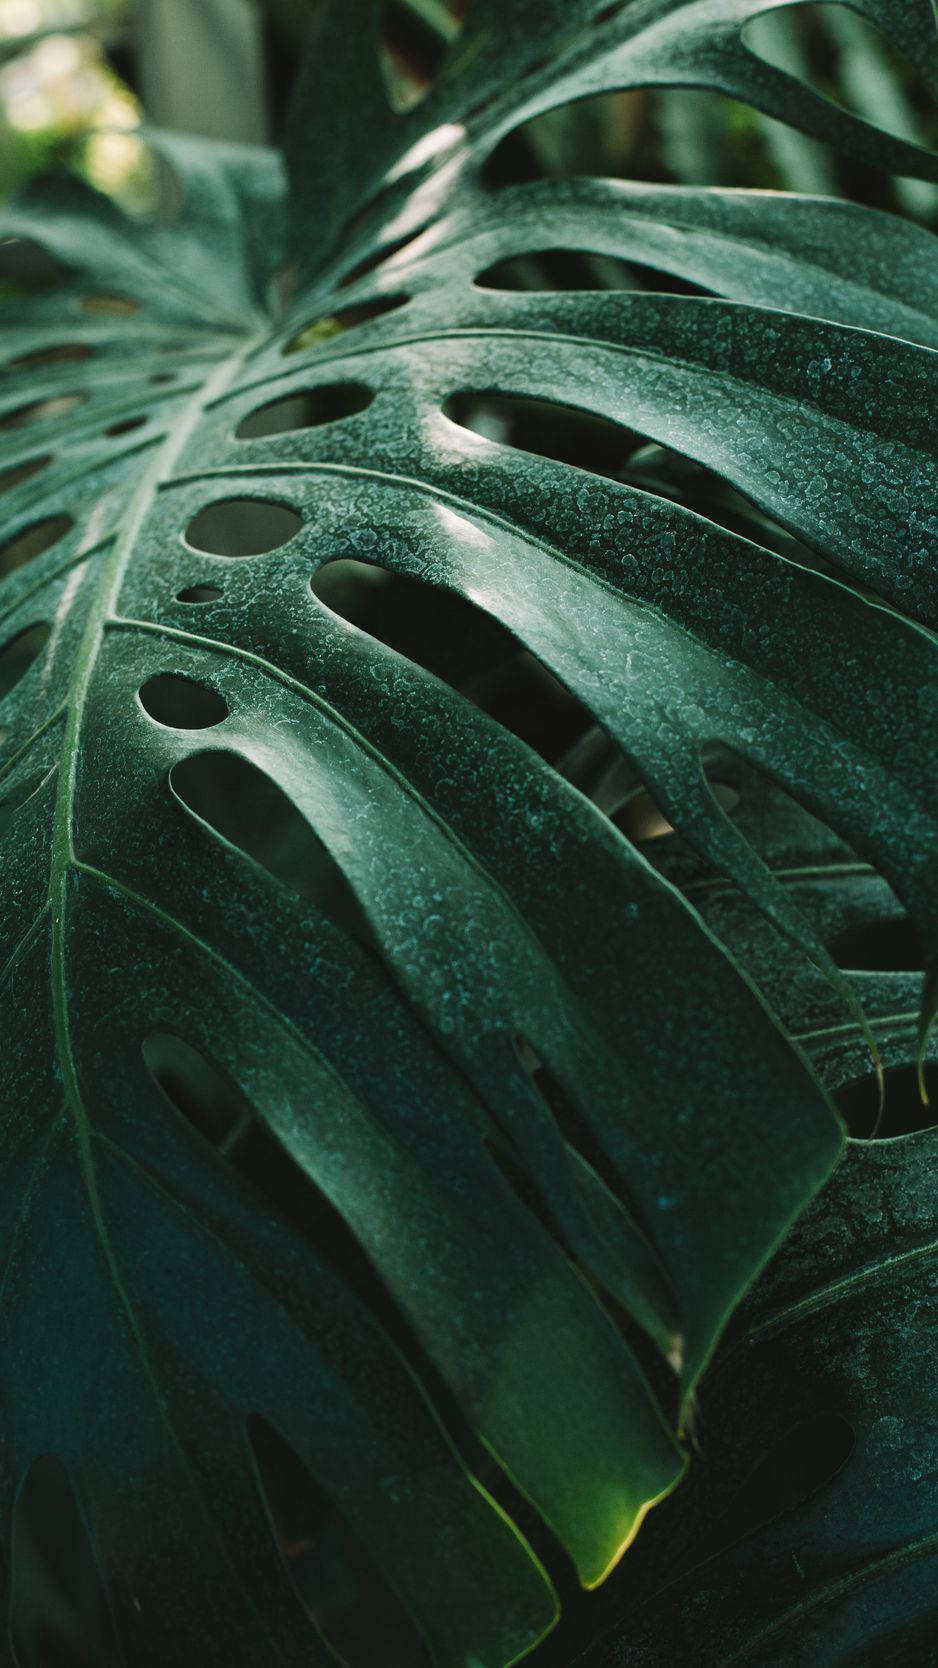 Send en besked om naturen og teknologi med dette planteiphone-tapet. Wallpaper